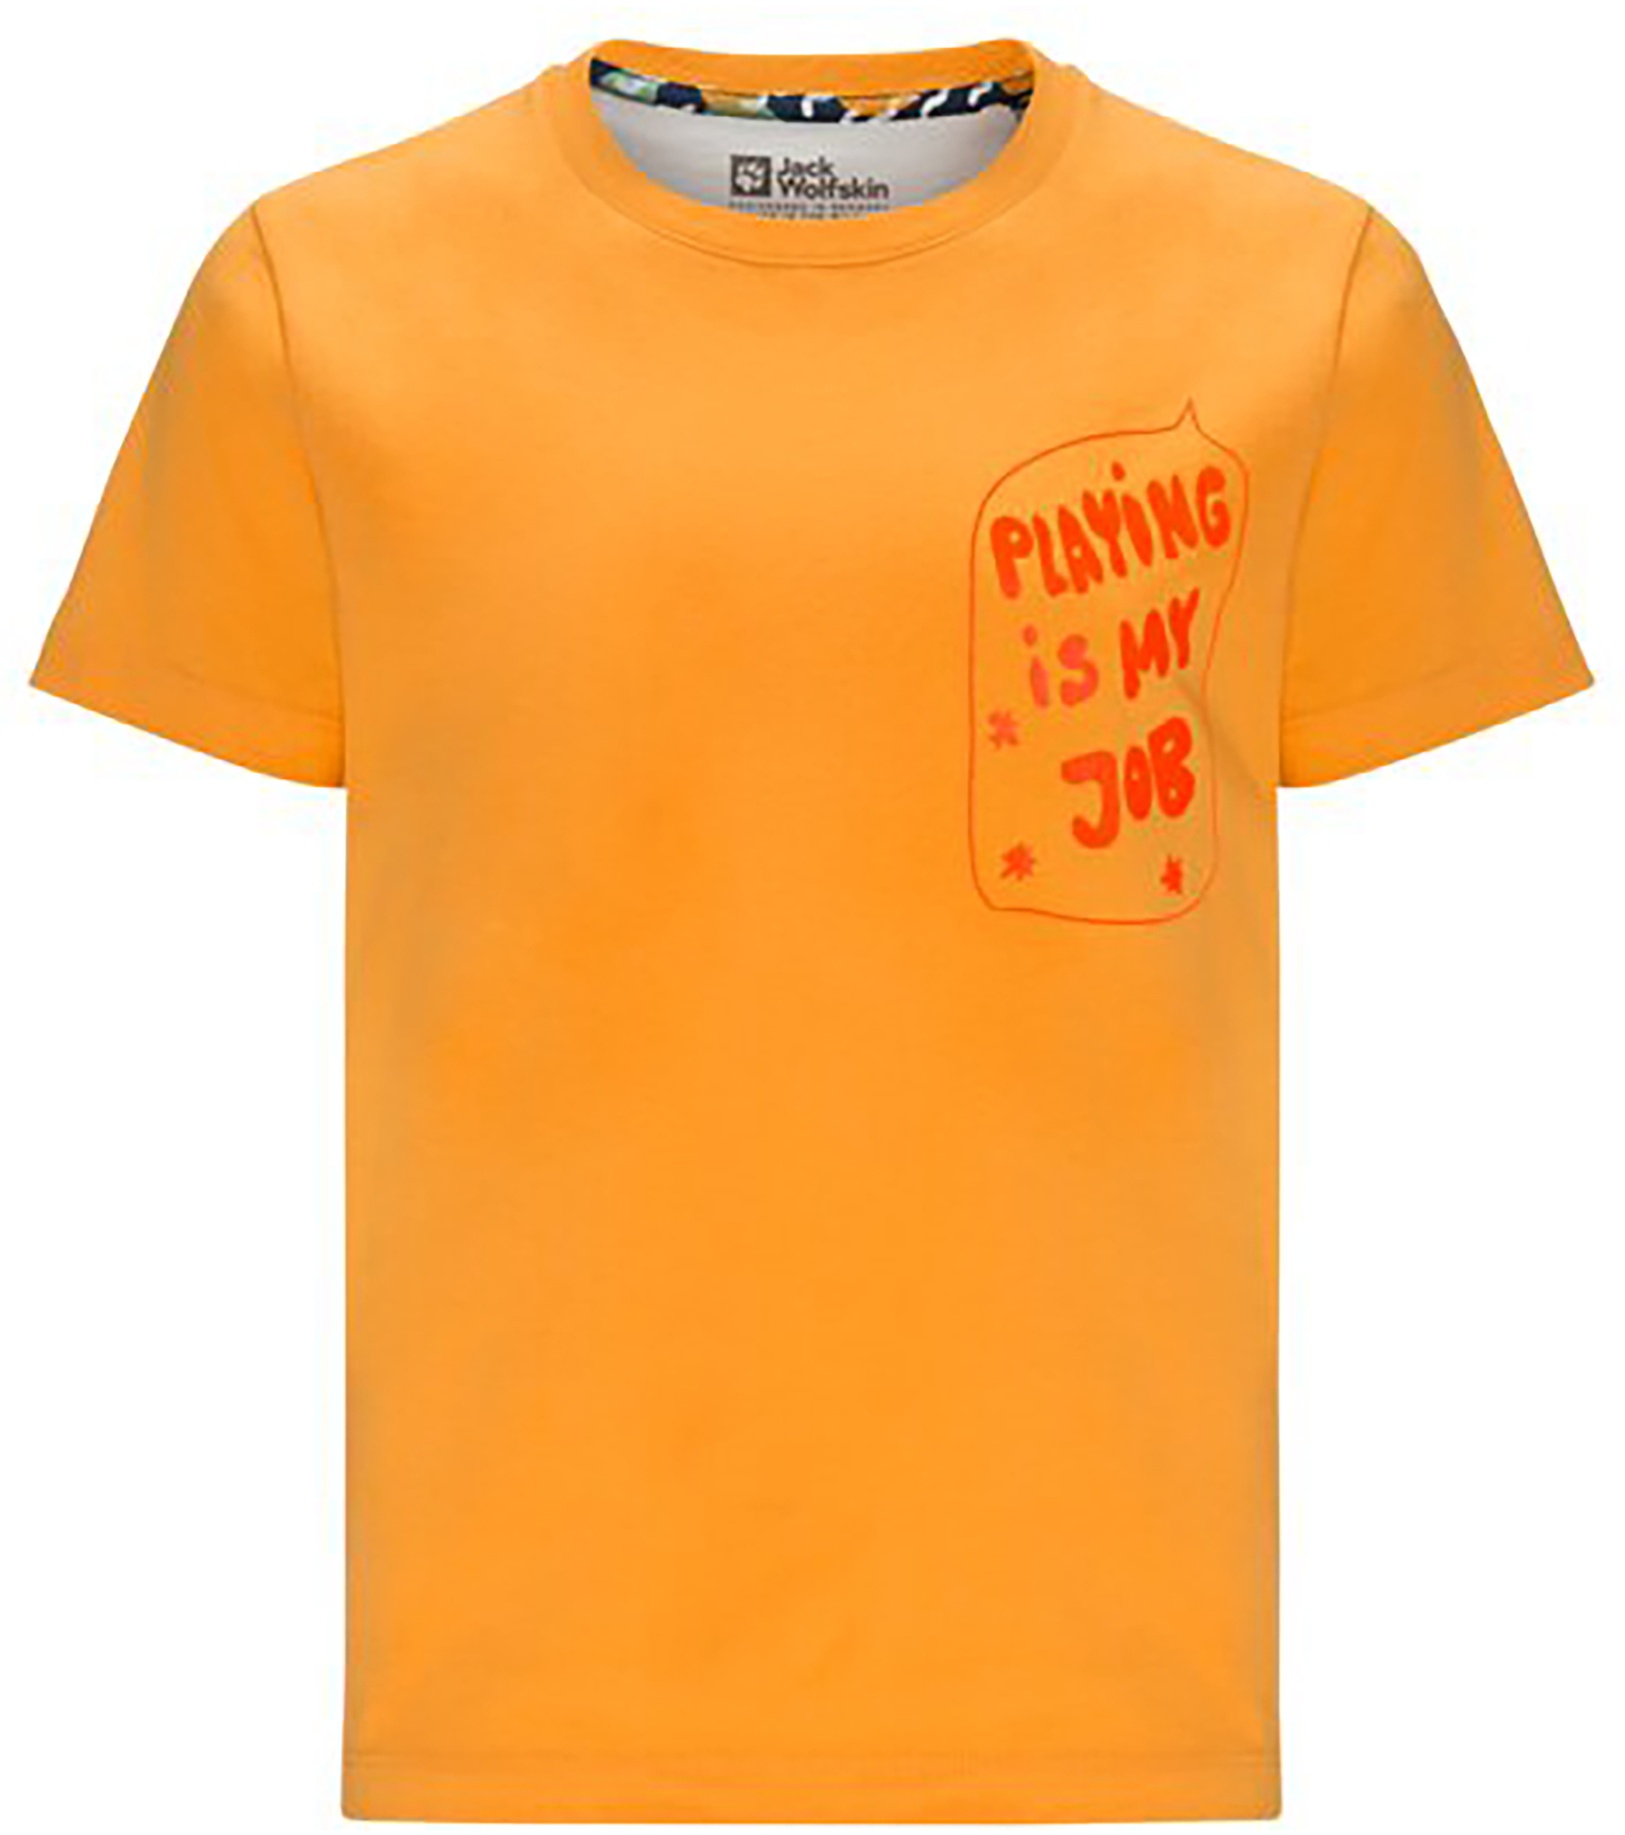 Jack Wolfskin - T-Shirt VILLI T K in orange pop, Gr.104